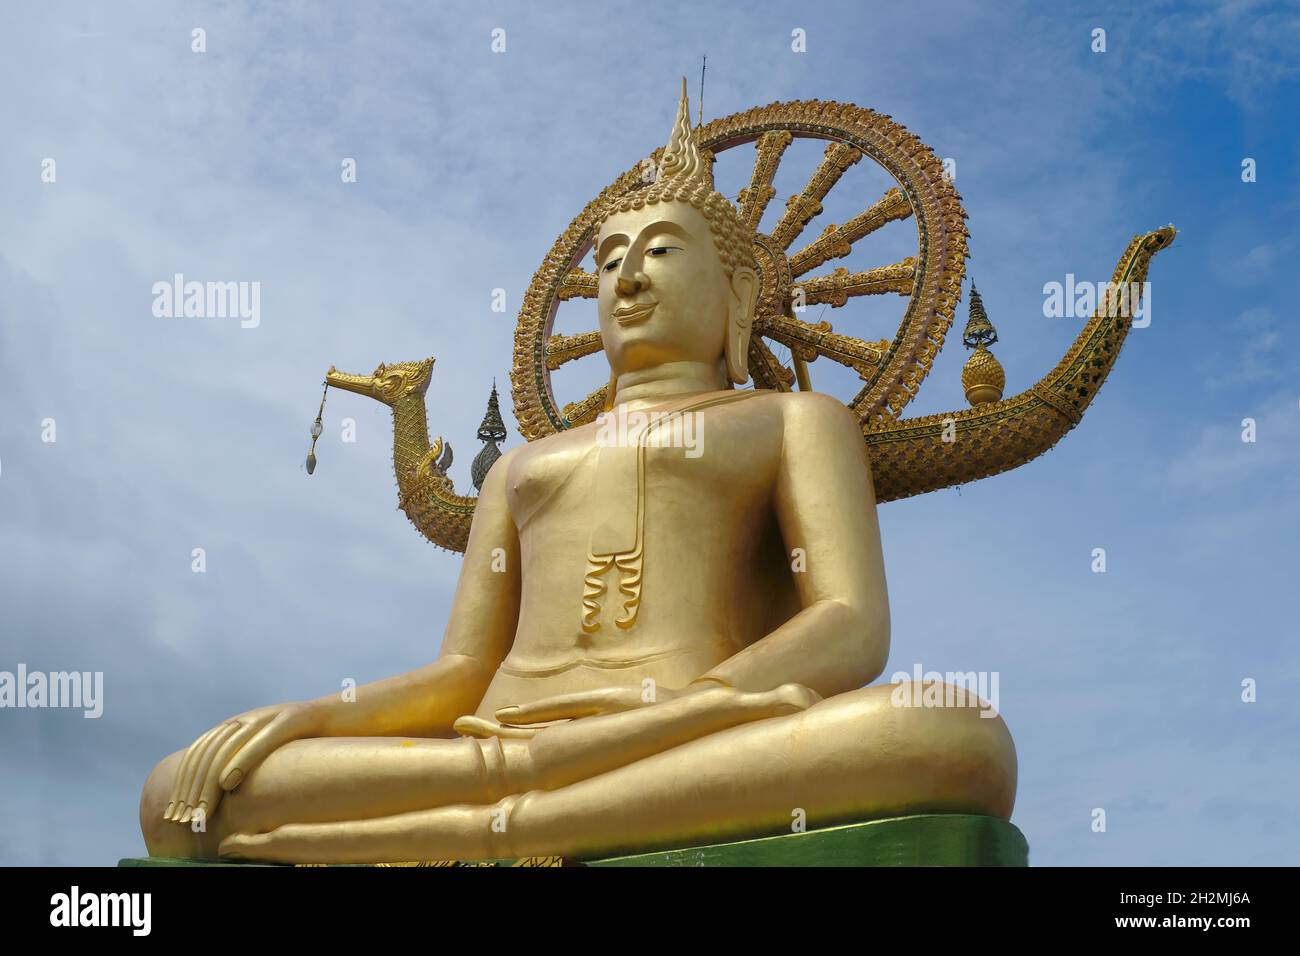 The big Buddha of Ko Samui, Thailand Stock Photo